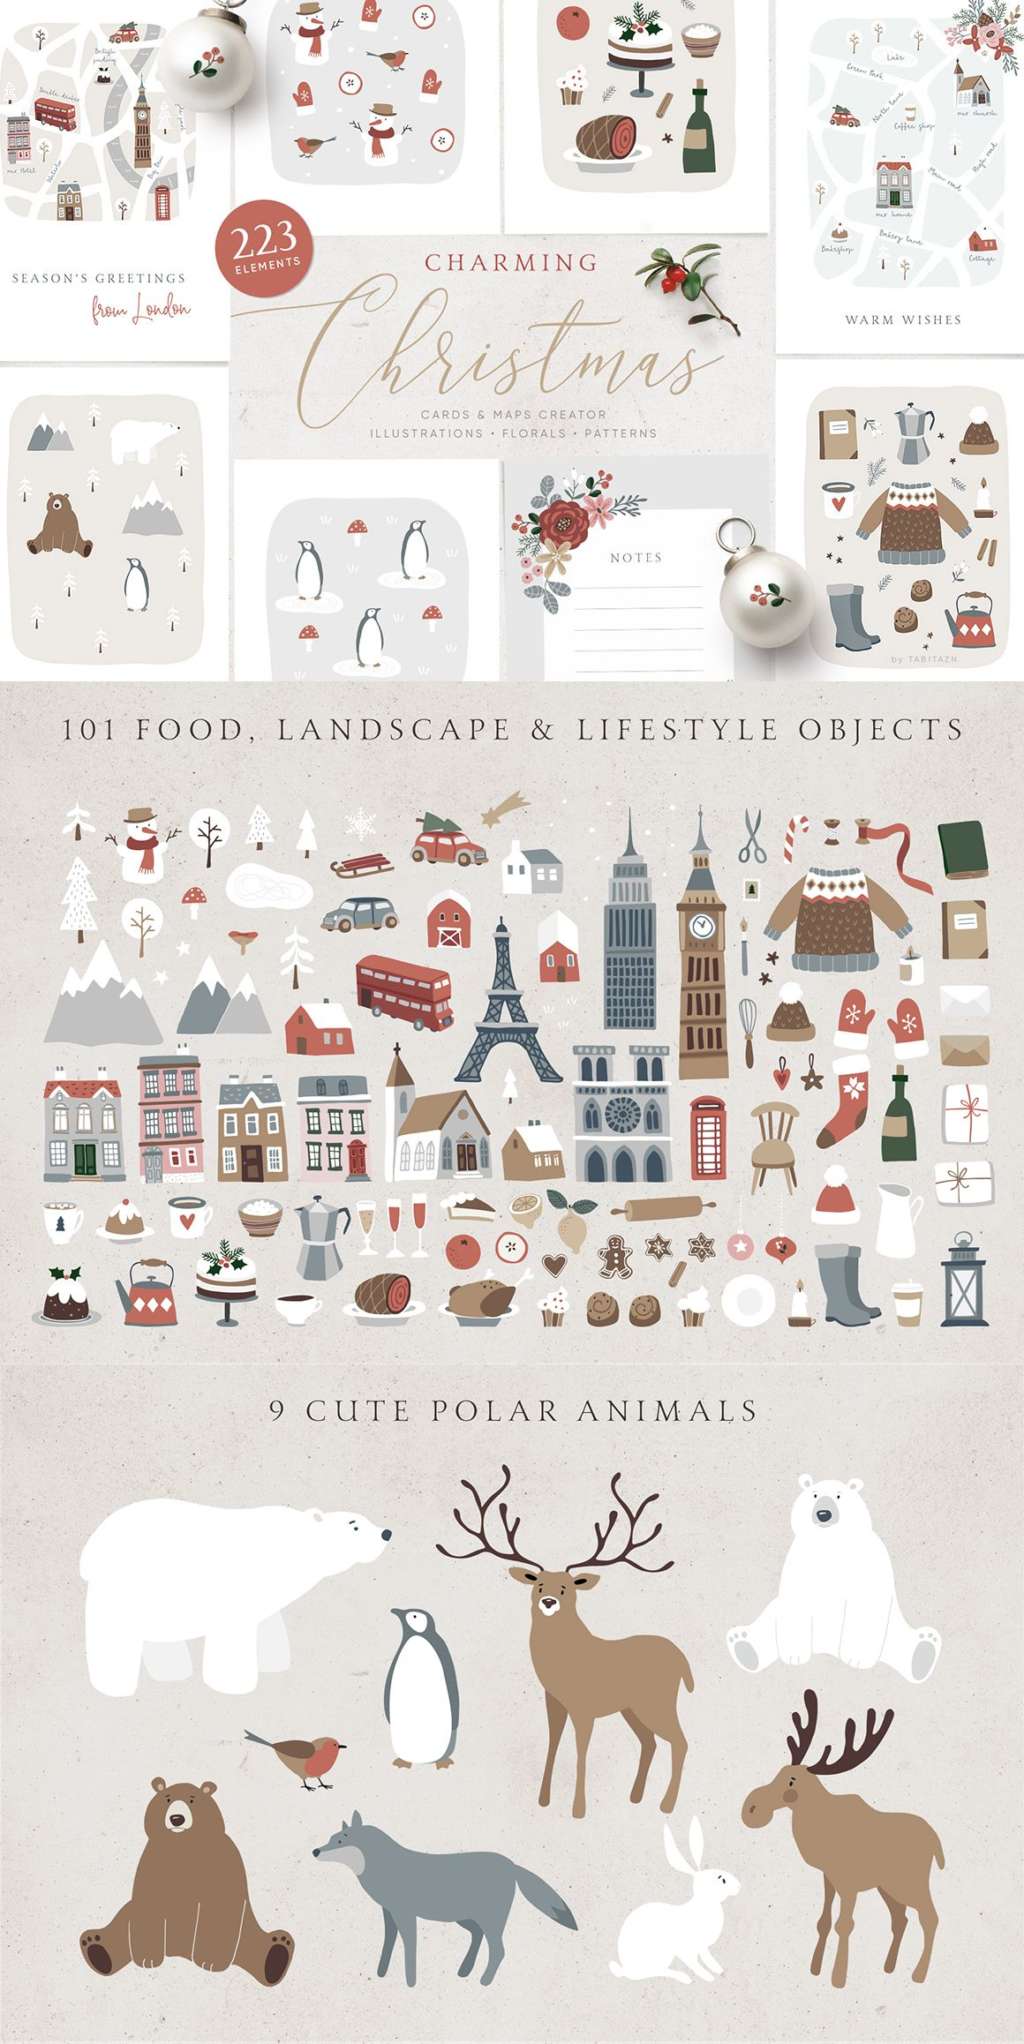 Charming Christmas Card & Map Creator